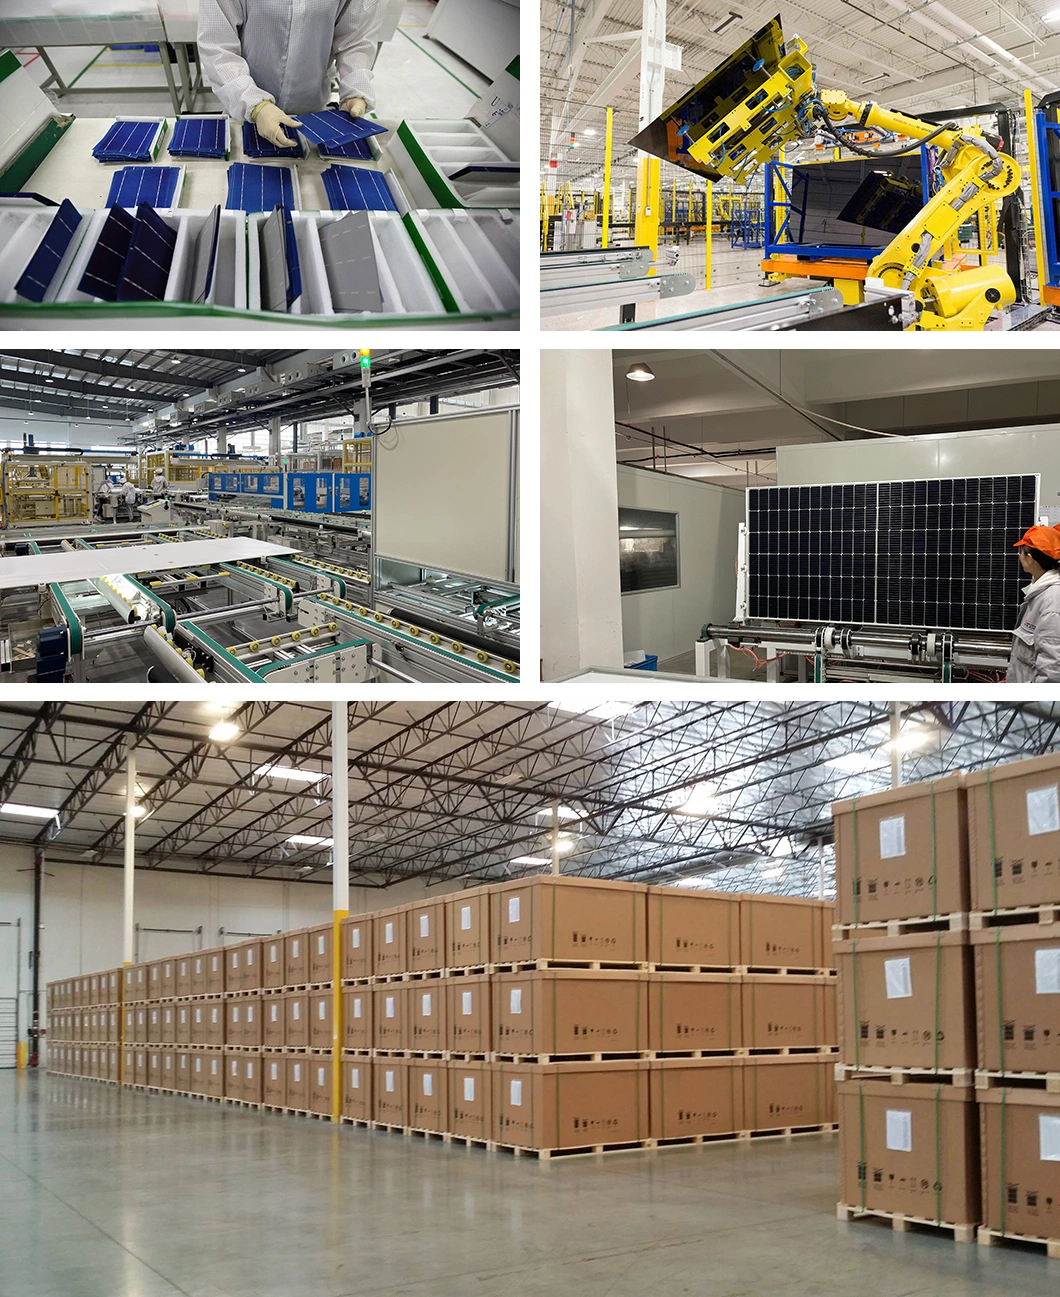 High Quality Big Size Panel China Monocrystalline Panels Power Cables Shingled Mono Solar Panels